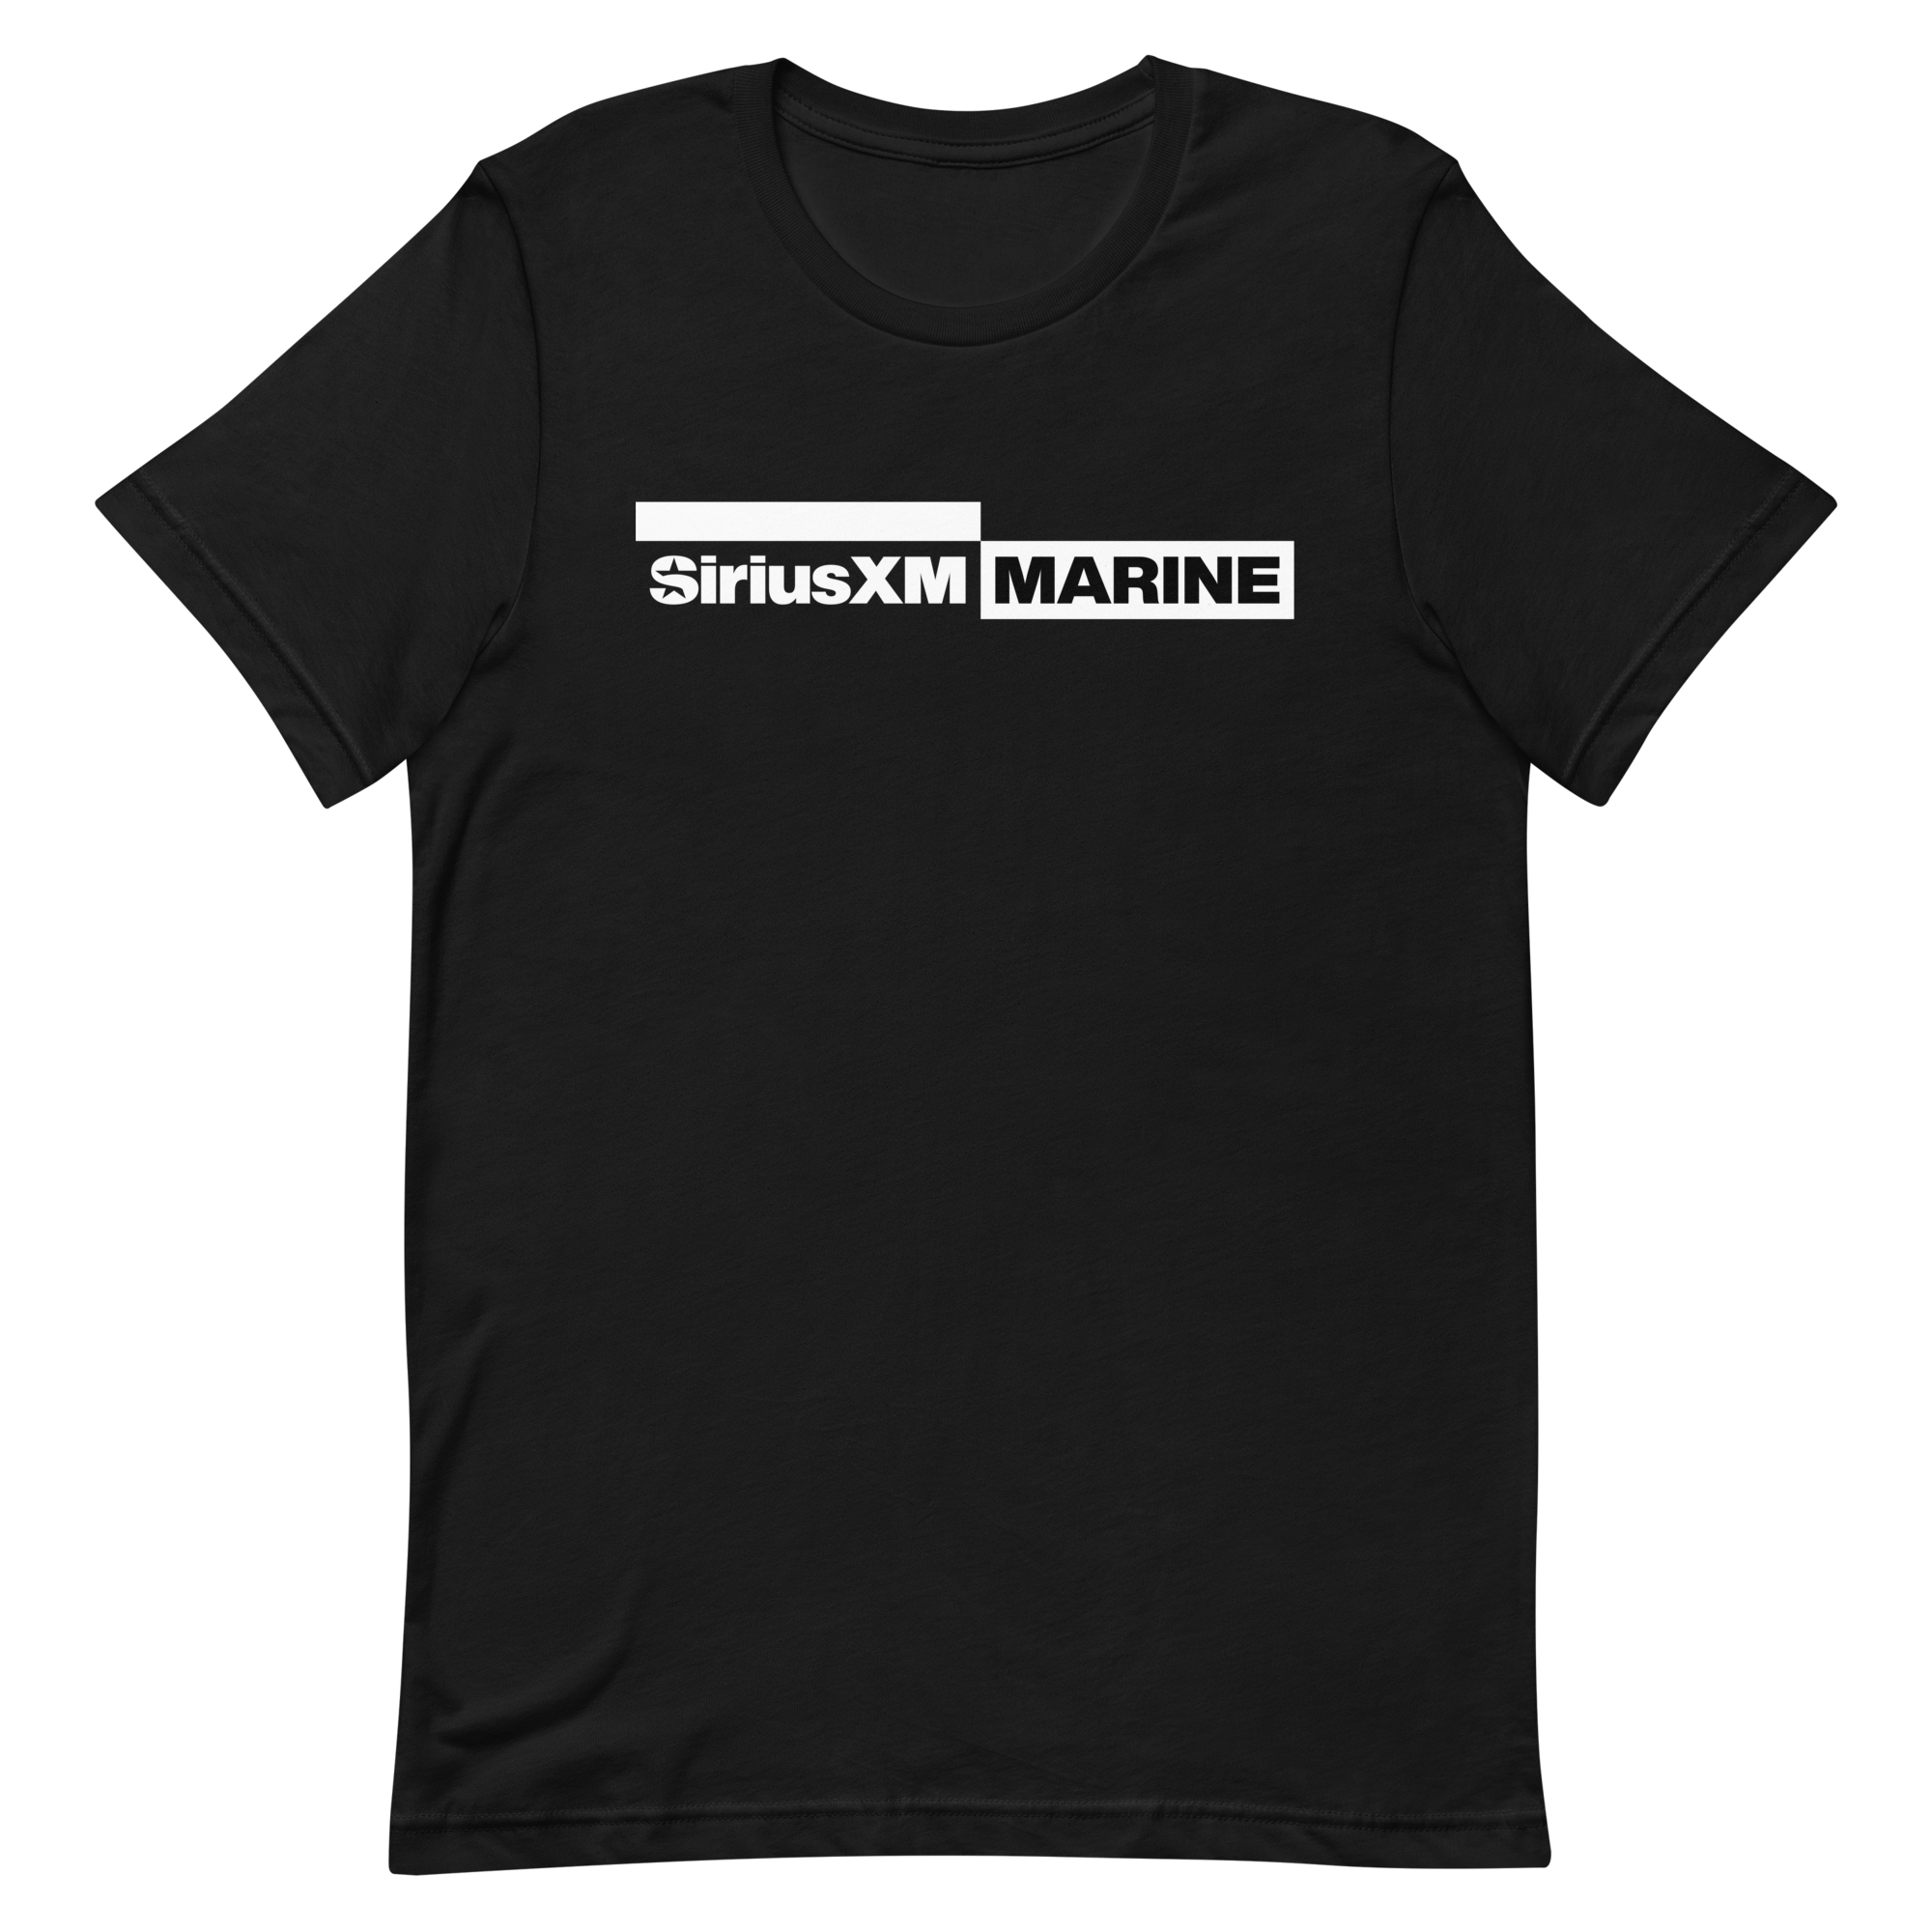 SiriusXM Marine: Black T-shirt